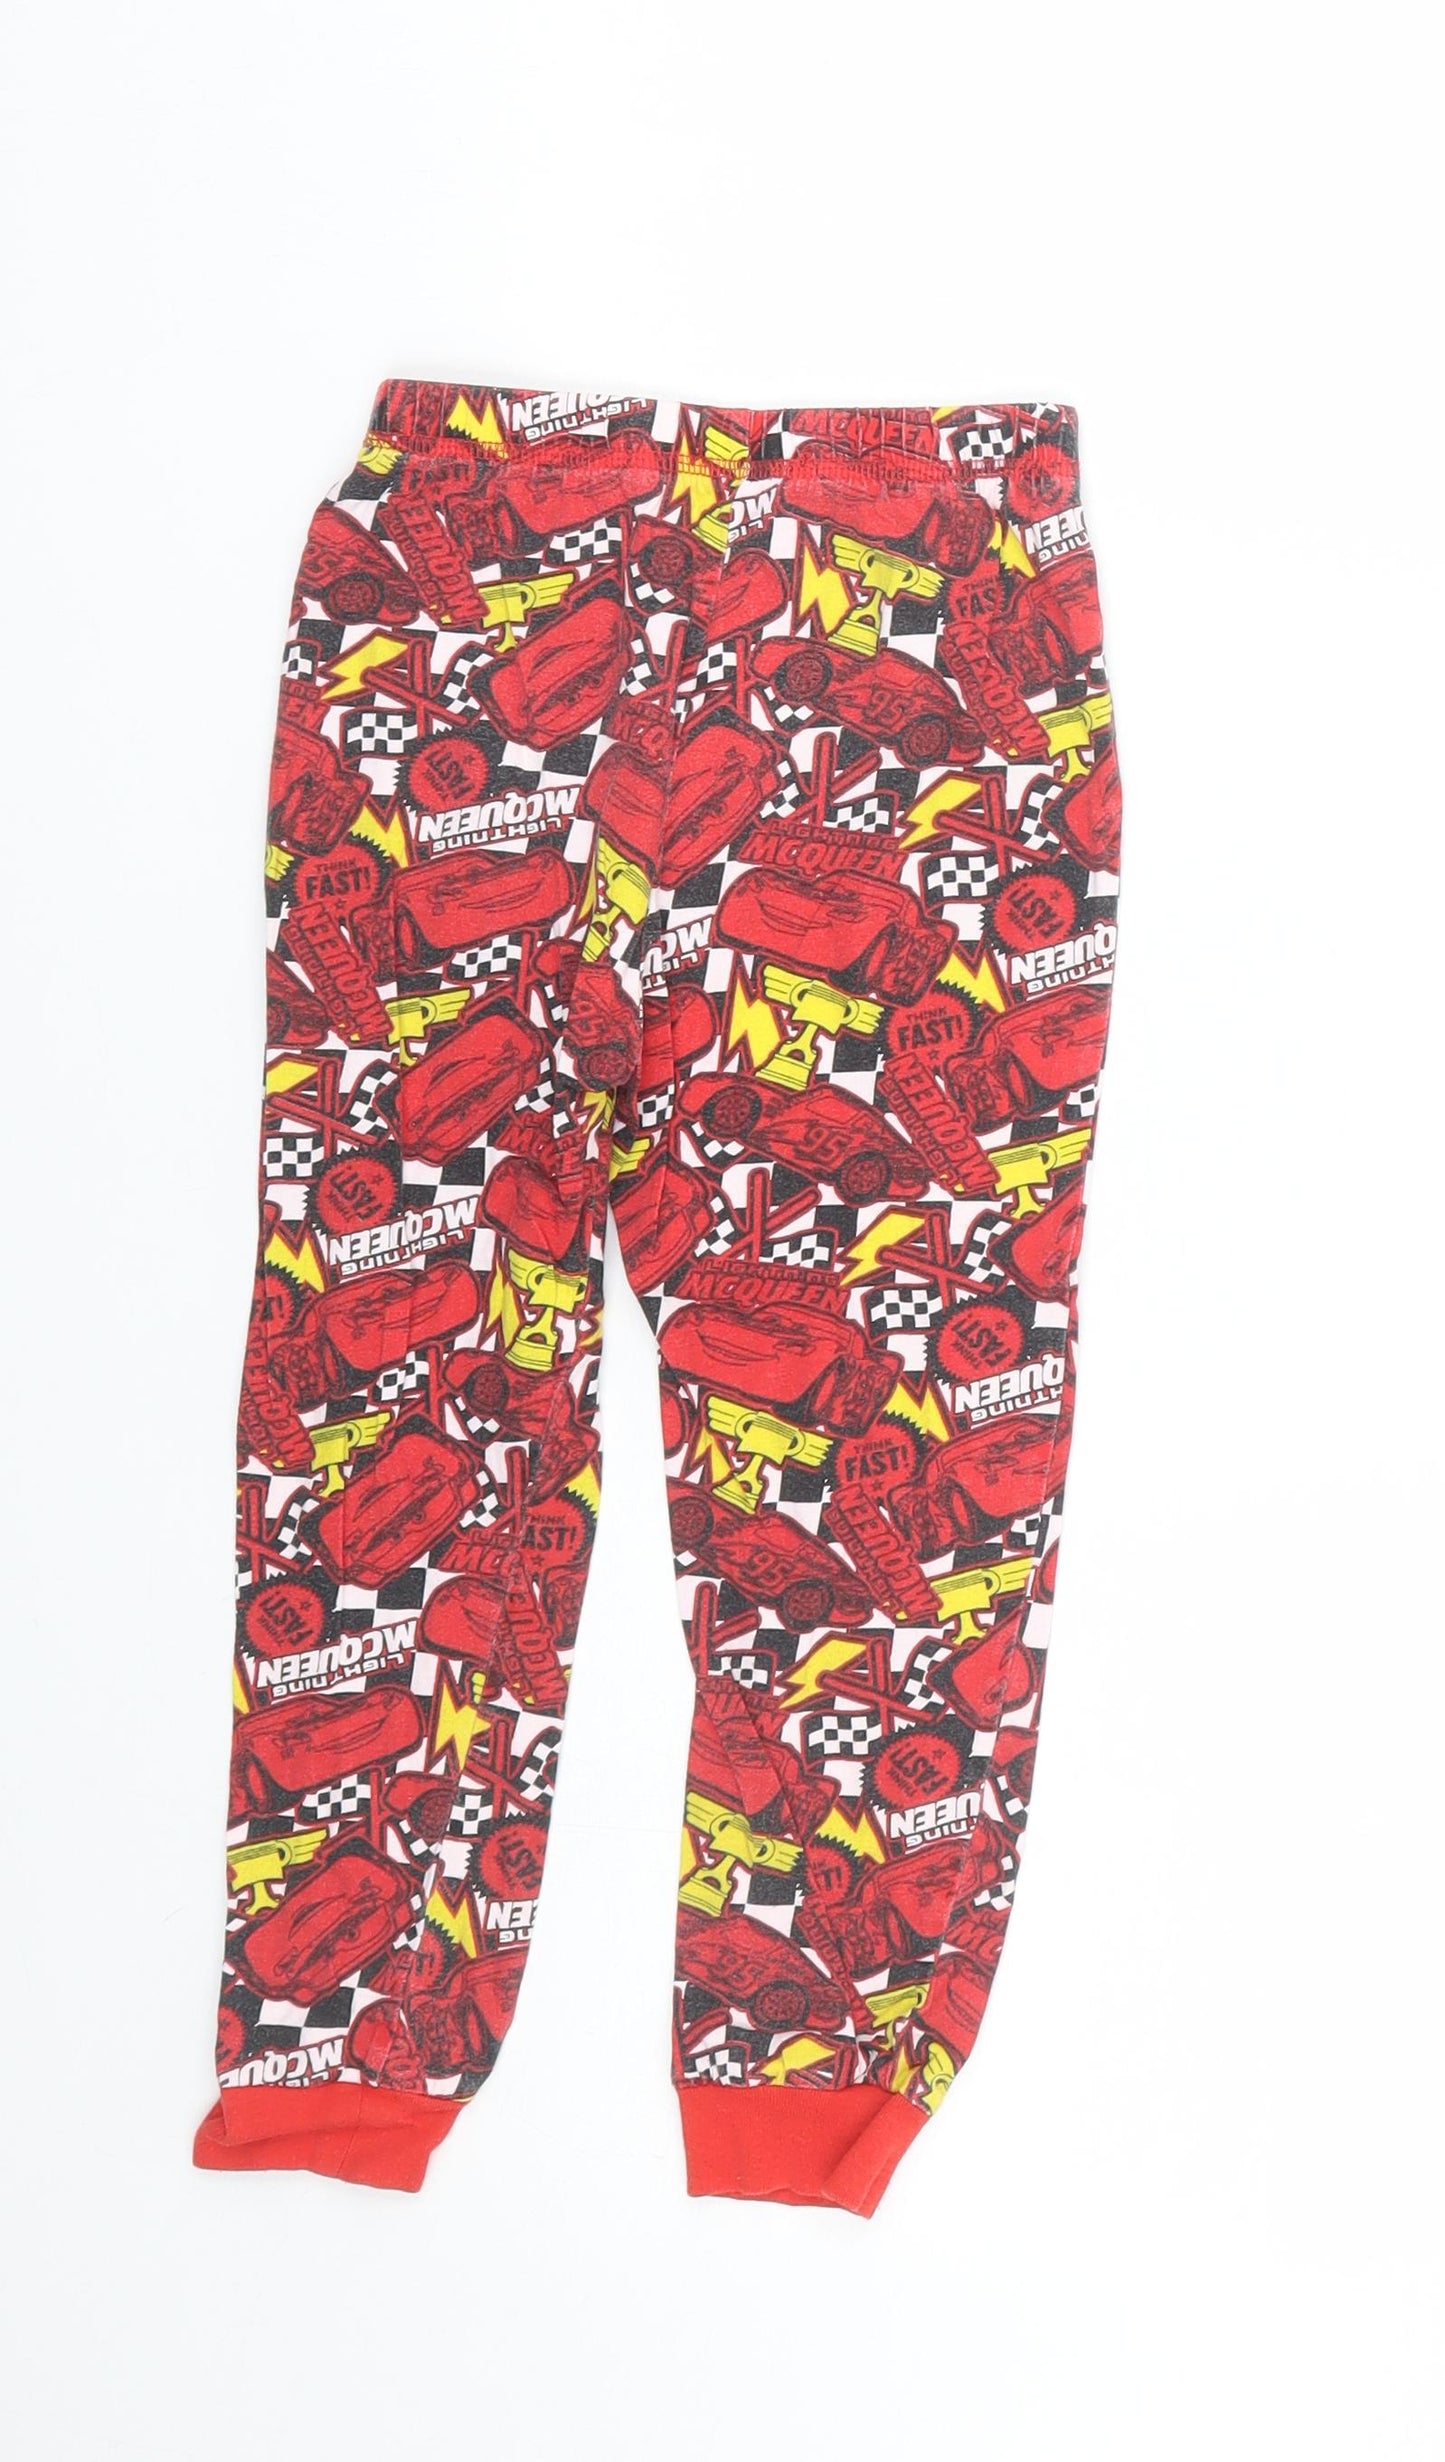 George Boys Red    Pyjama Pants Size 4-5 Years  - Disney Cars